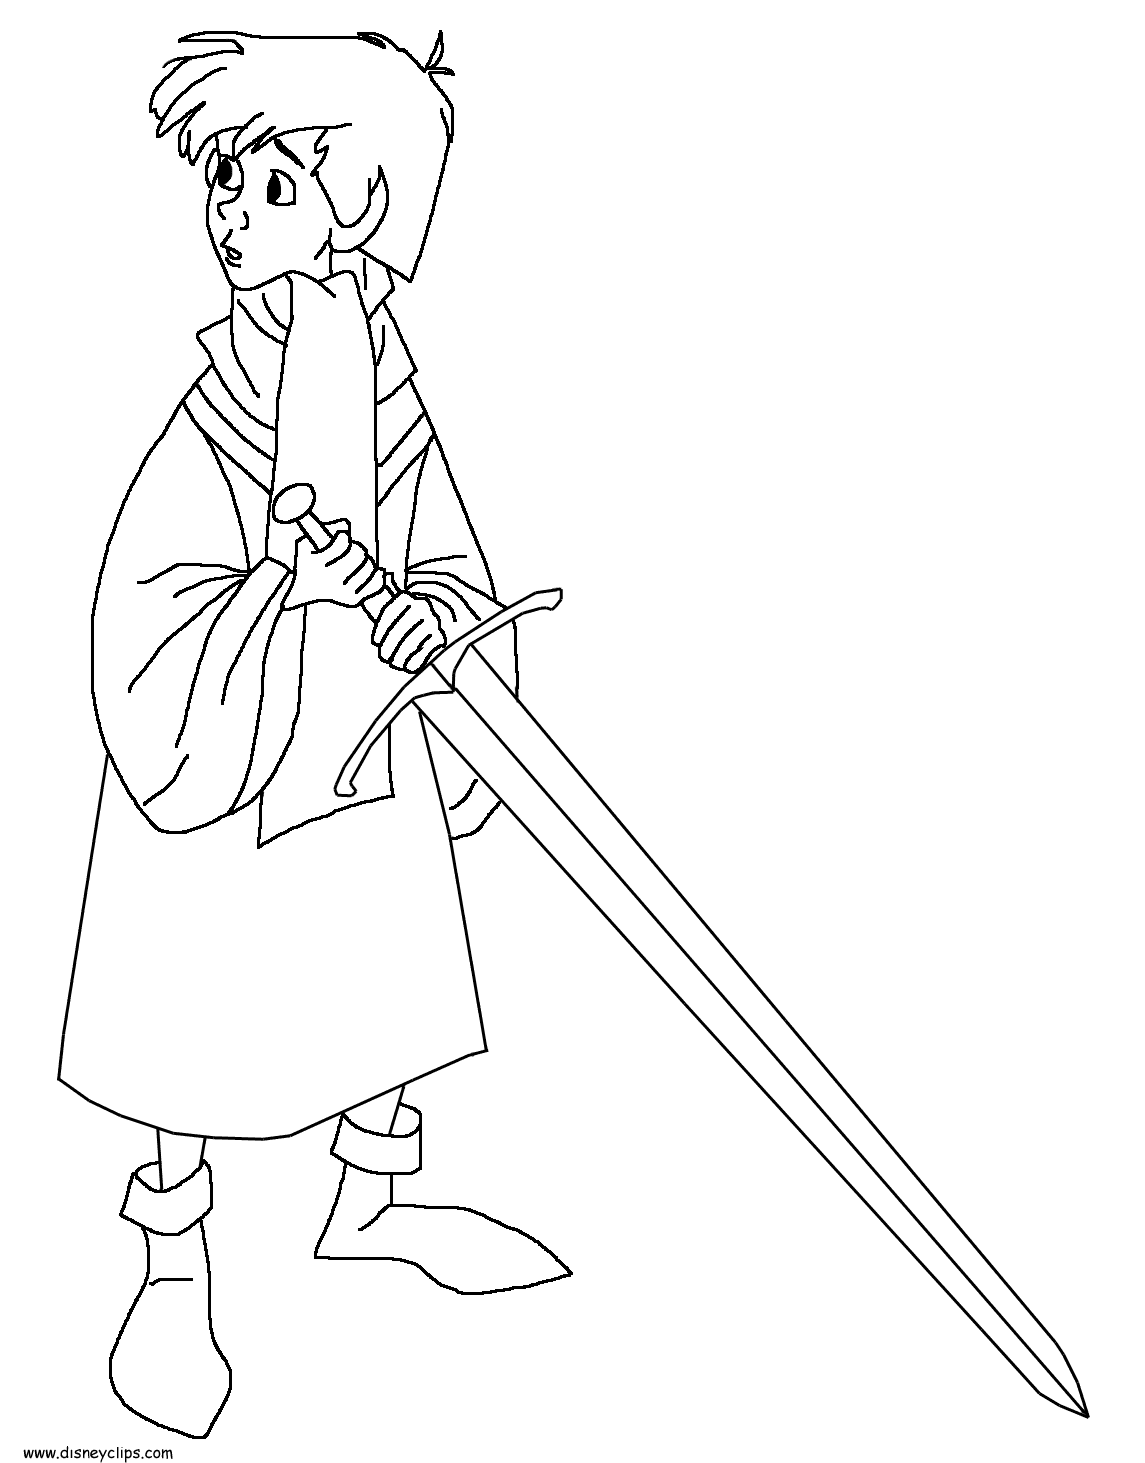 Warth segurando a espada de Sword in the Stone